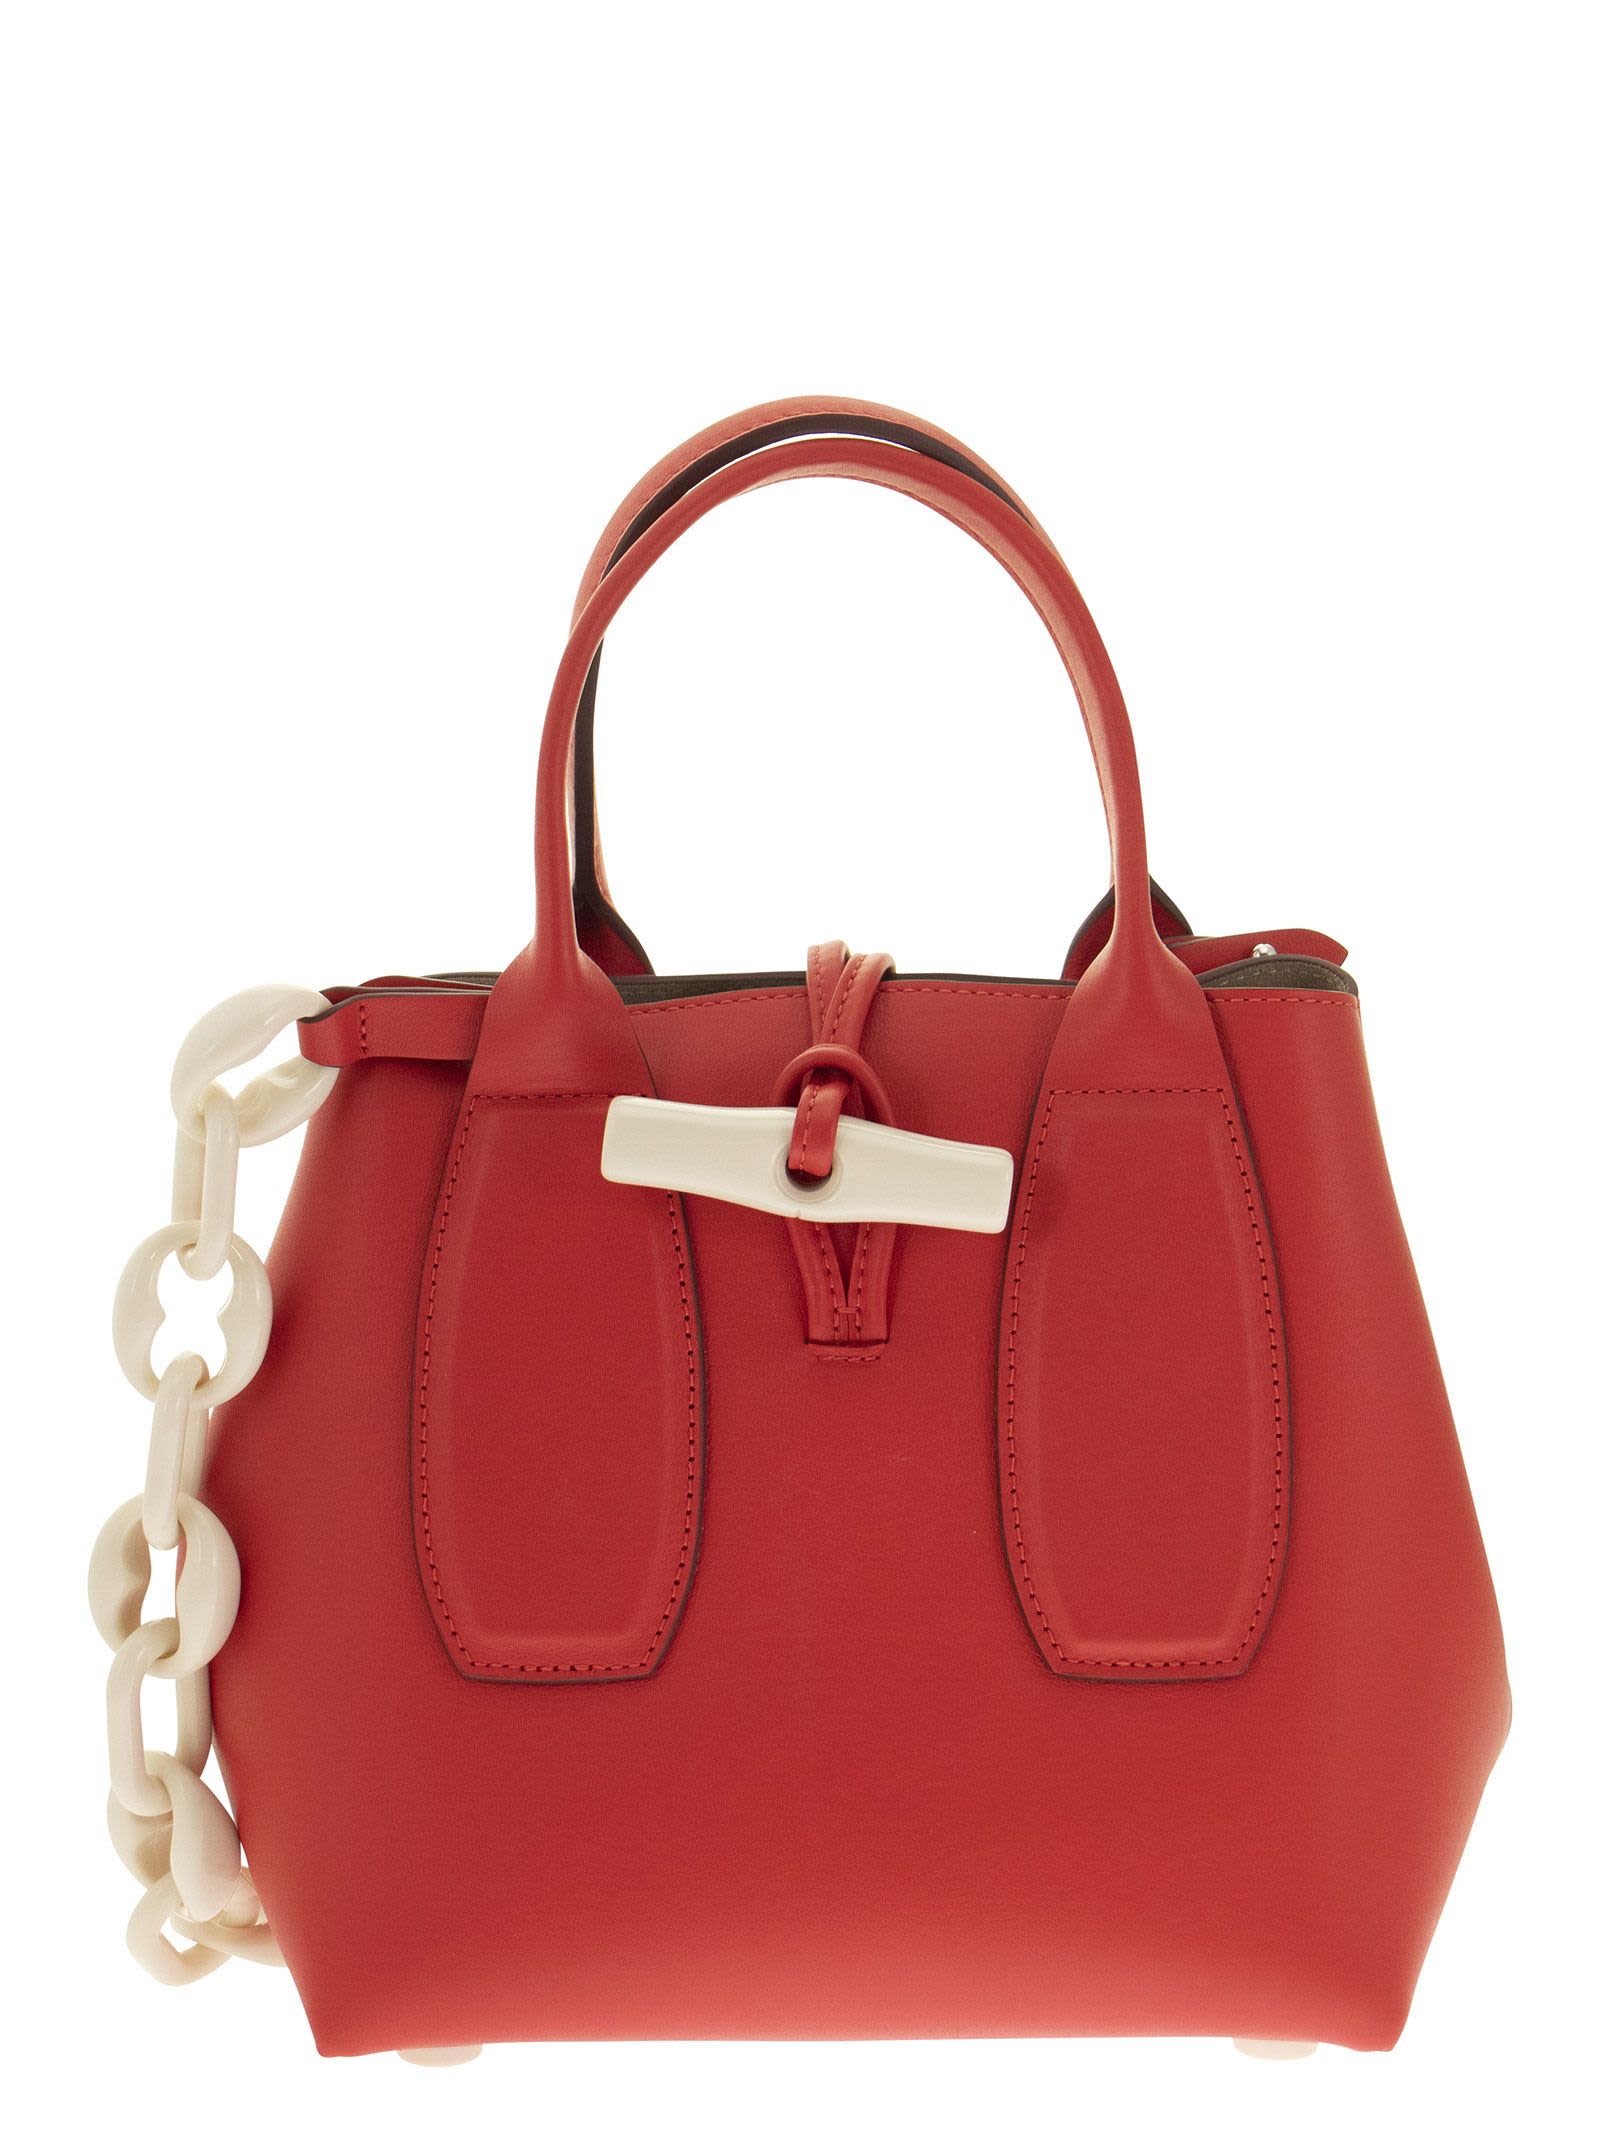 Longchamp Roseau - Handbag